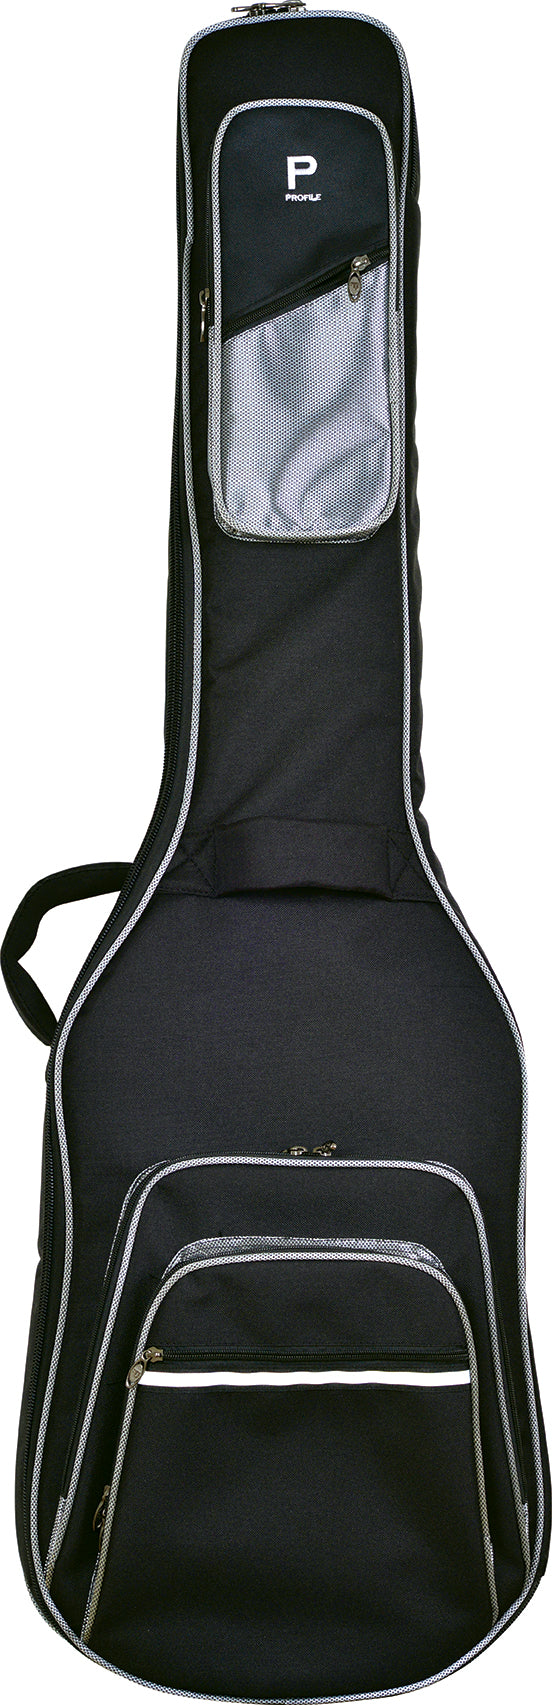 Profile Sturdy Electric Guitar Bag